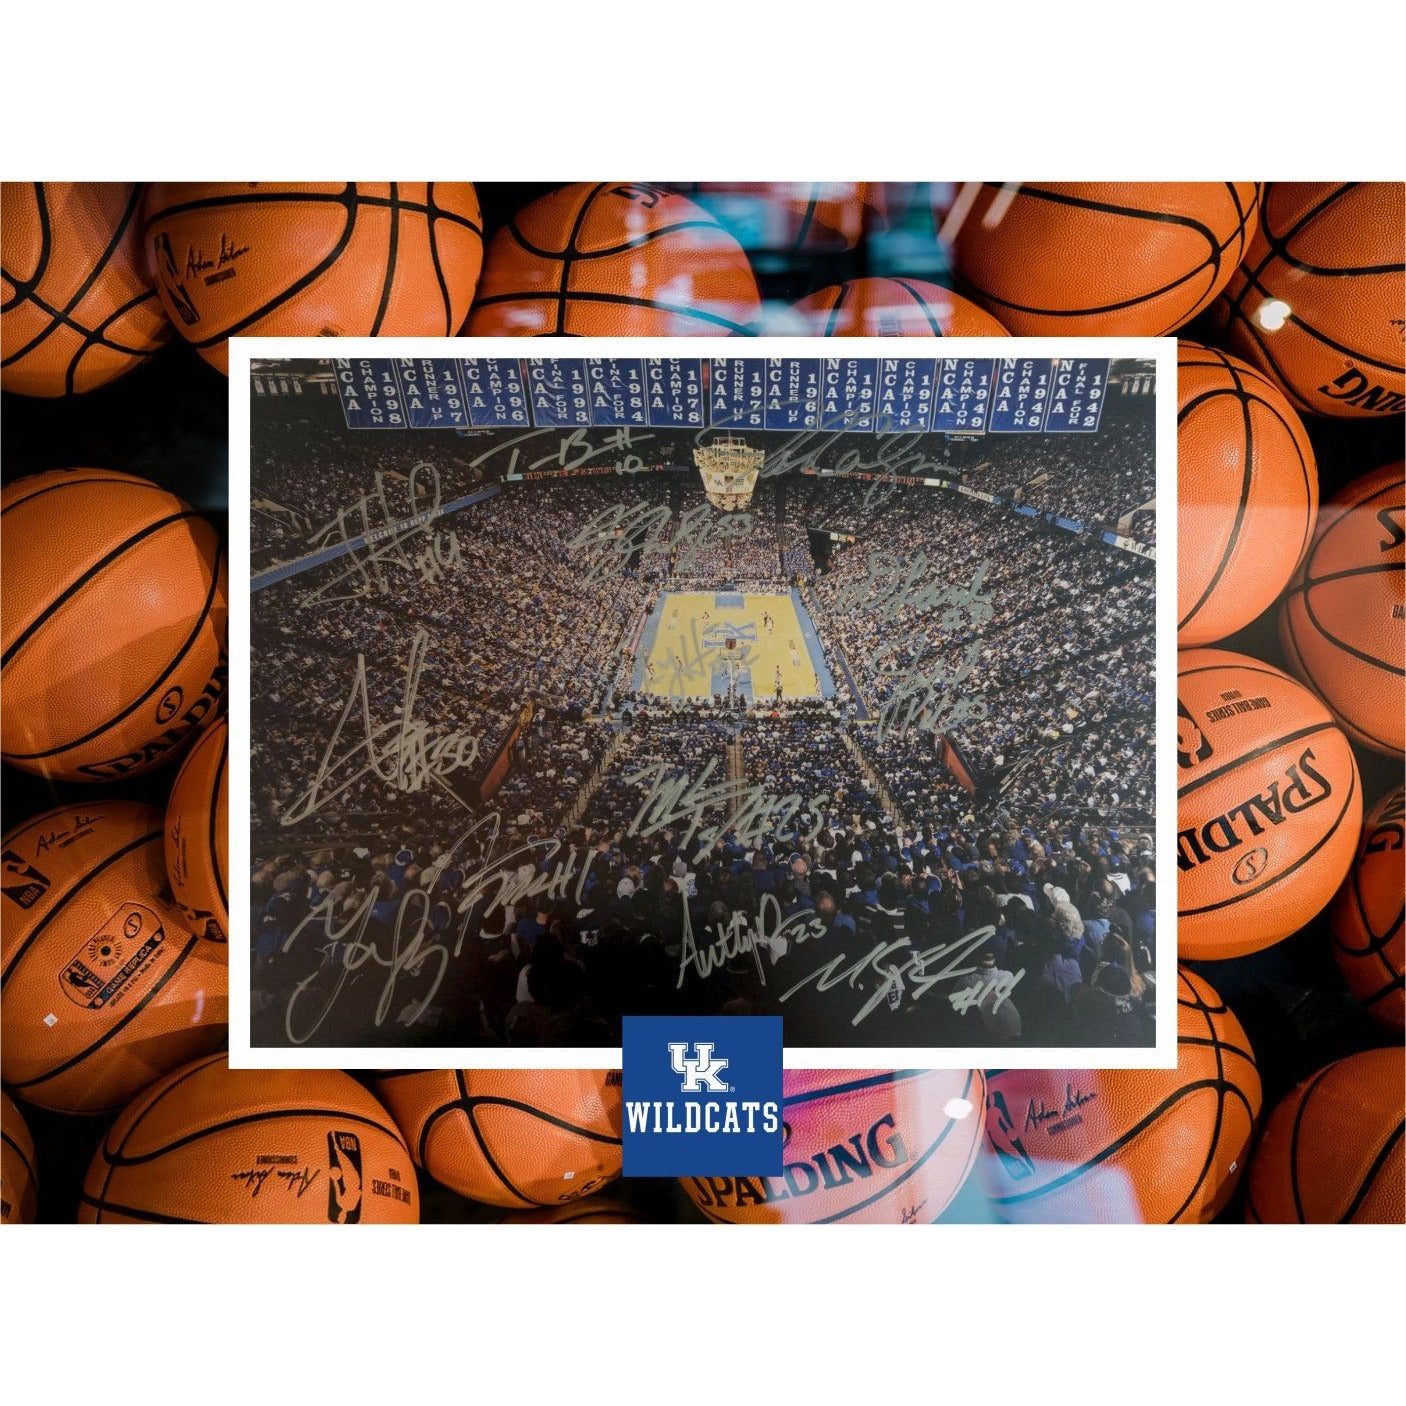 Anthony Davis University of Kentucky 2012 NCA men's basketball national champions team signed 11 by 14 photo